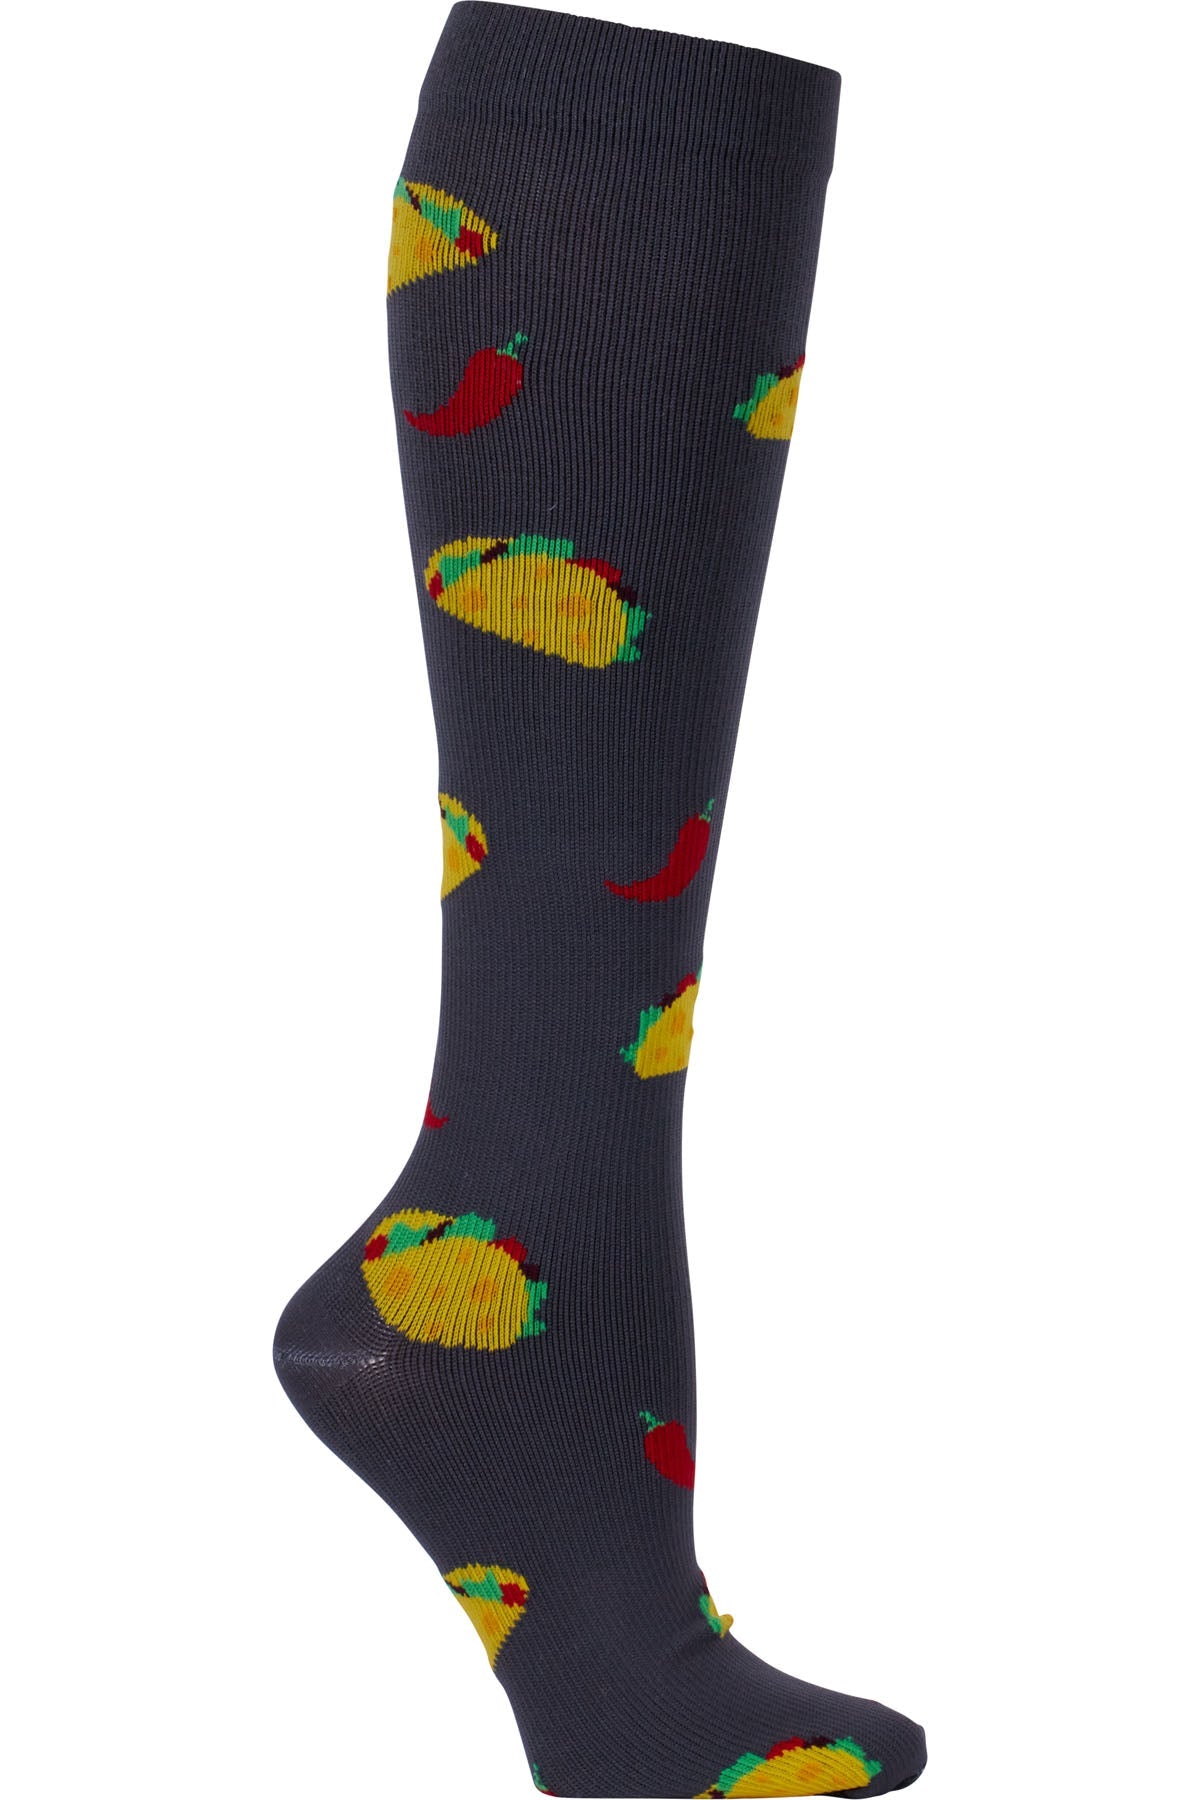 Men's Compression Socks 10-15mmHg